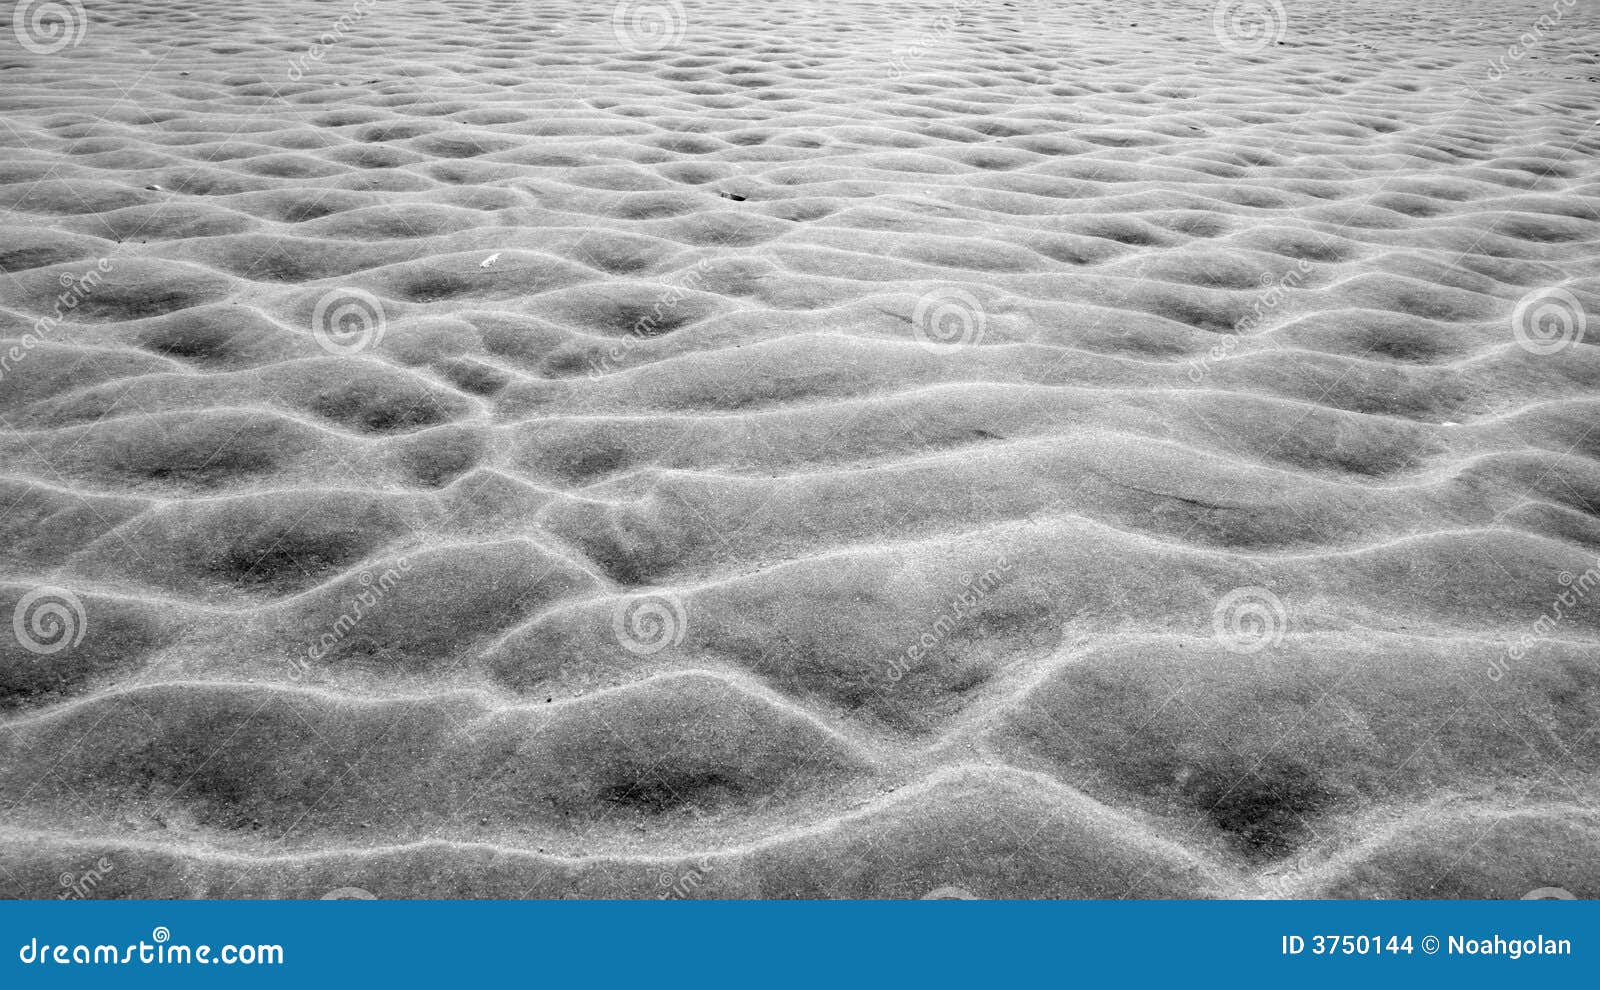 mudflat / sand